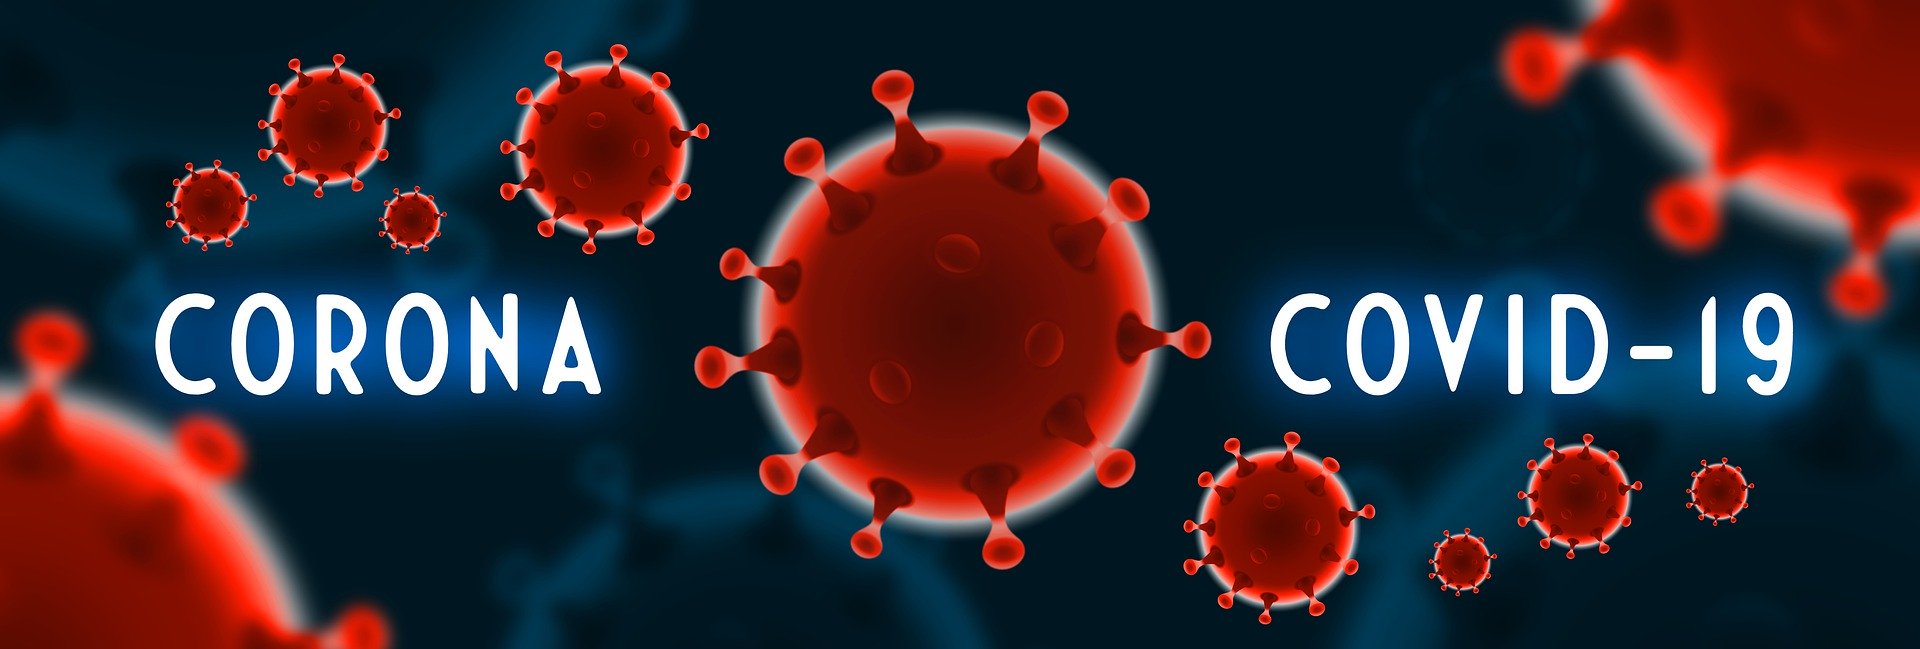 Double Glazing During Coronavirus (COVID-19) Pandemic | DGN